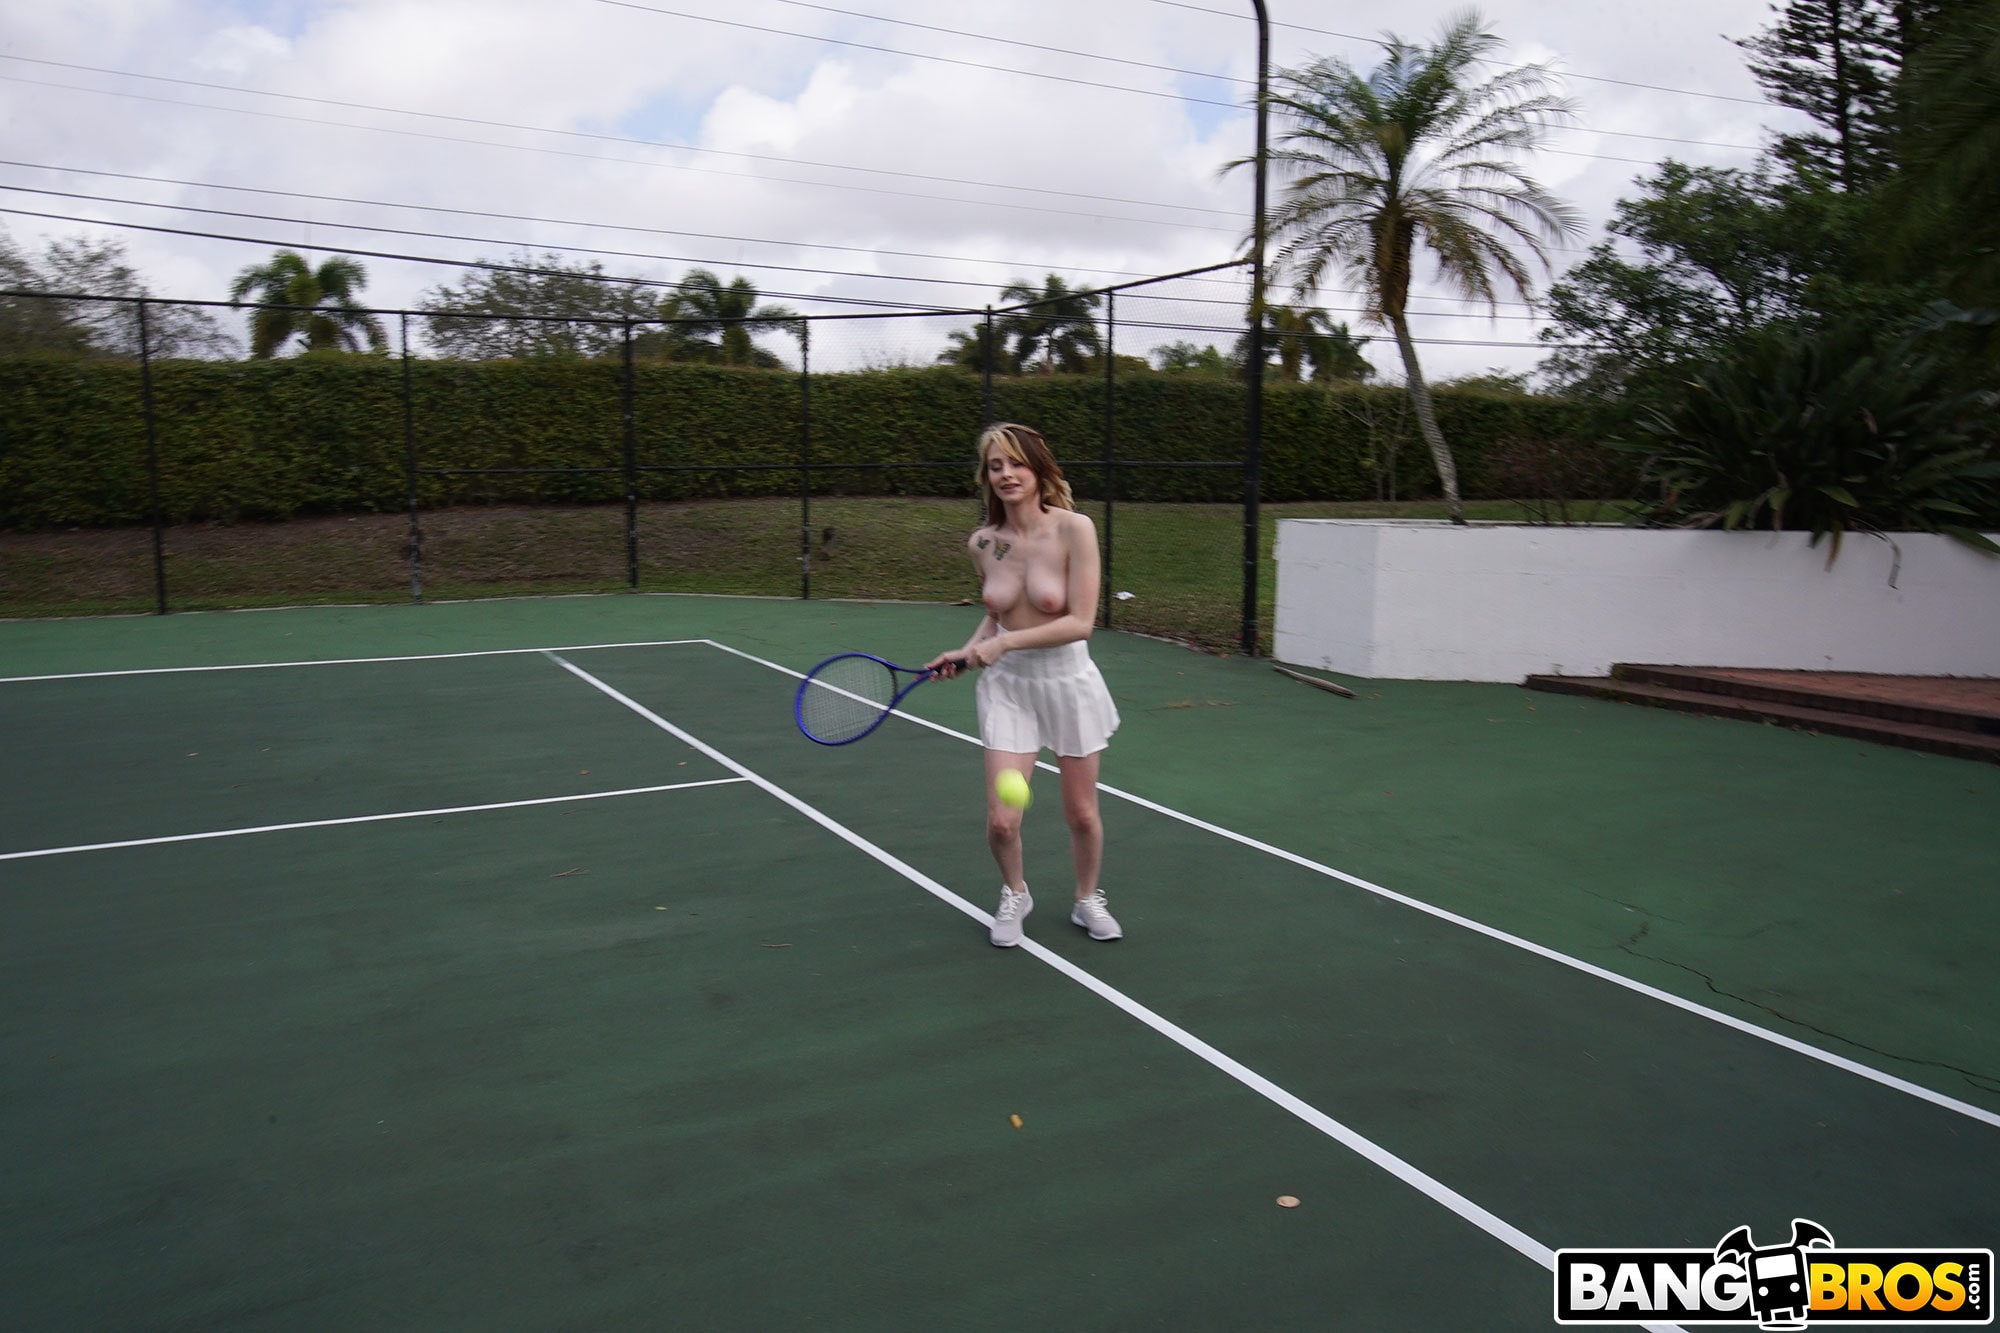 Bangbros 'Tennis Fuck Session' starring Kimberly Snow (Photo 72)